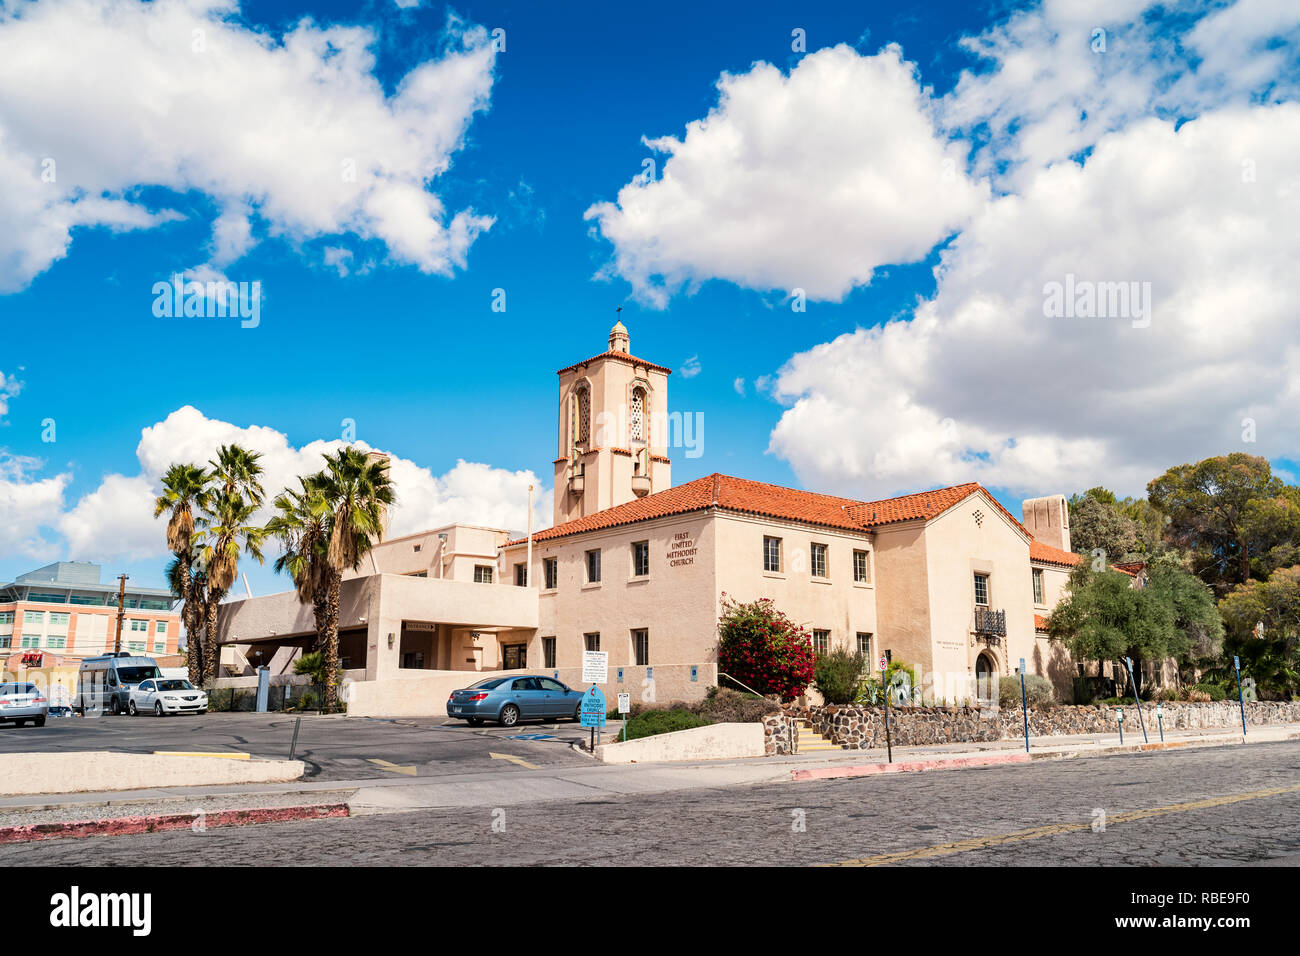 First United Methodist Church of Tucson on the campus of the University of Arizona in Tucson, Arizona. Stock Photo